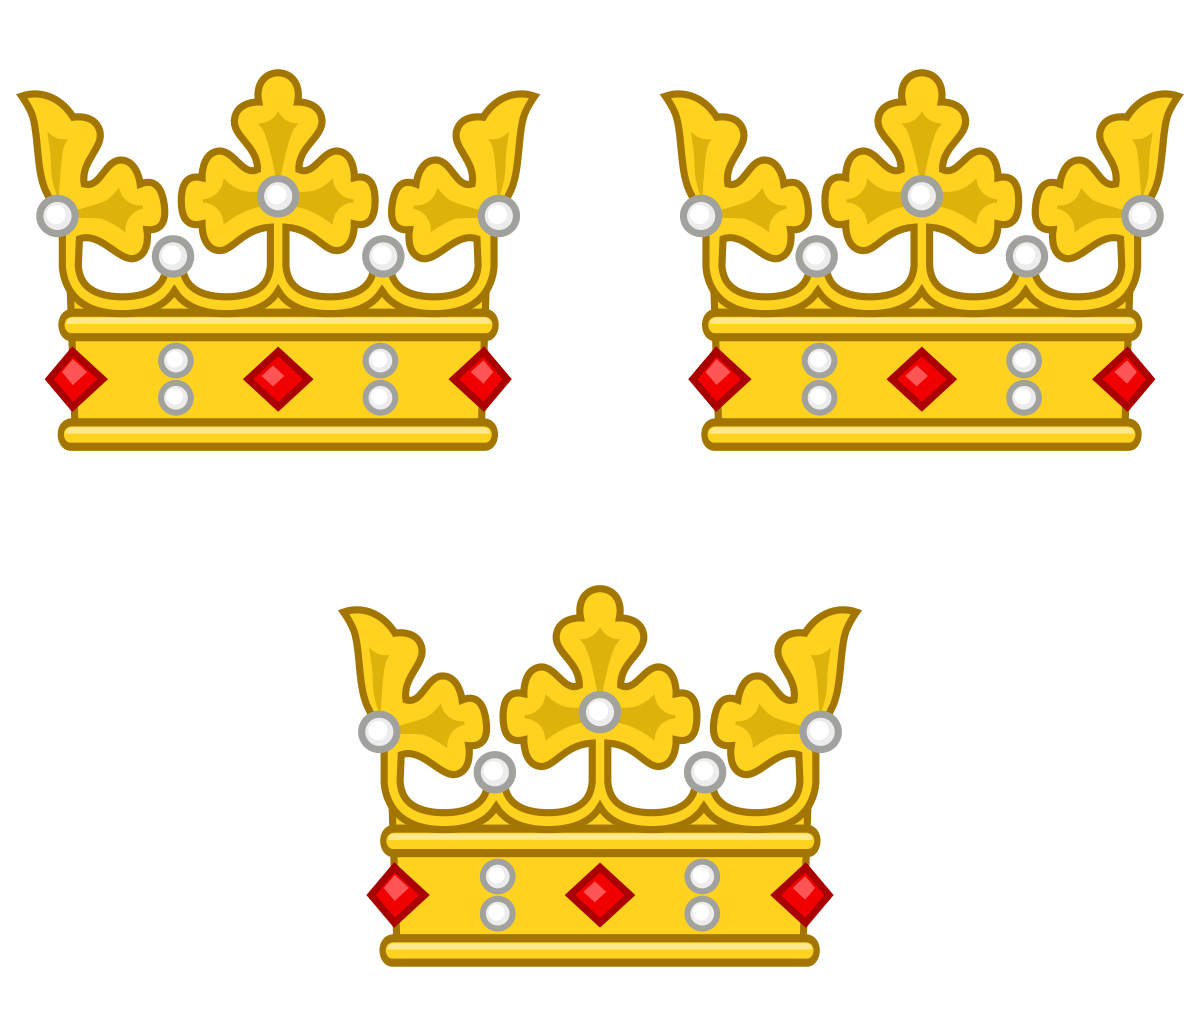 What Restaurant Has a Gold Crown Logo - Three Crowns